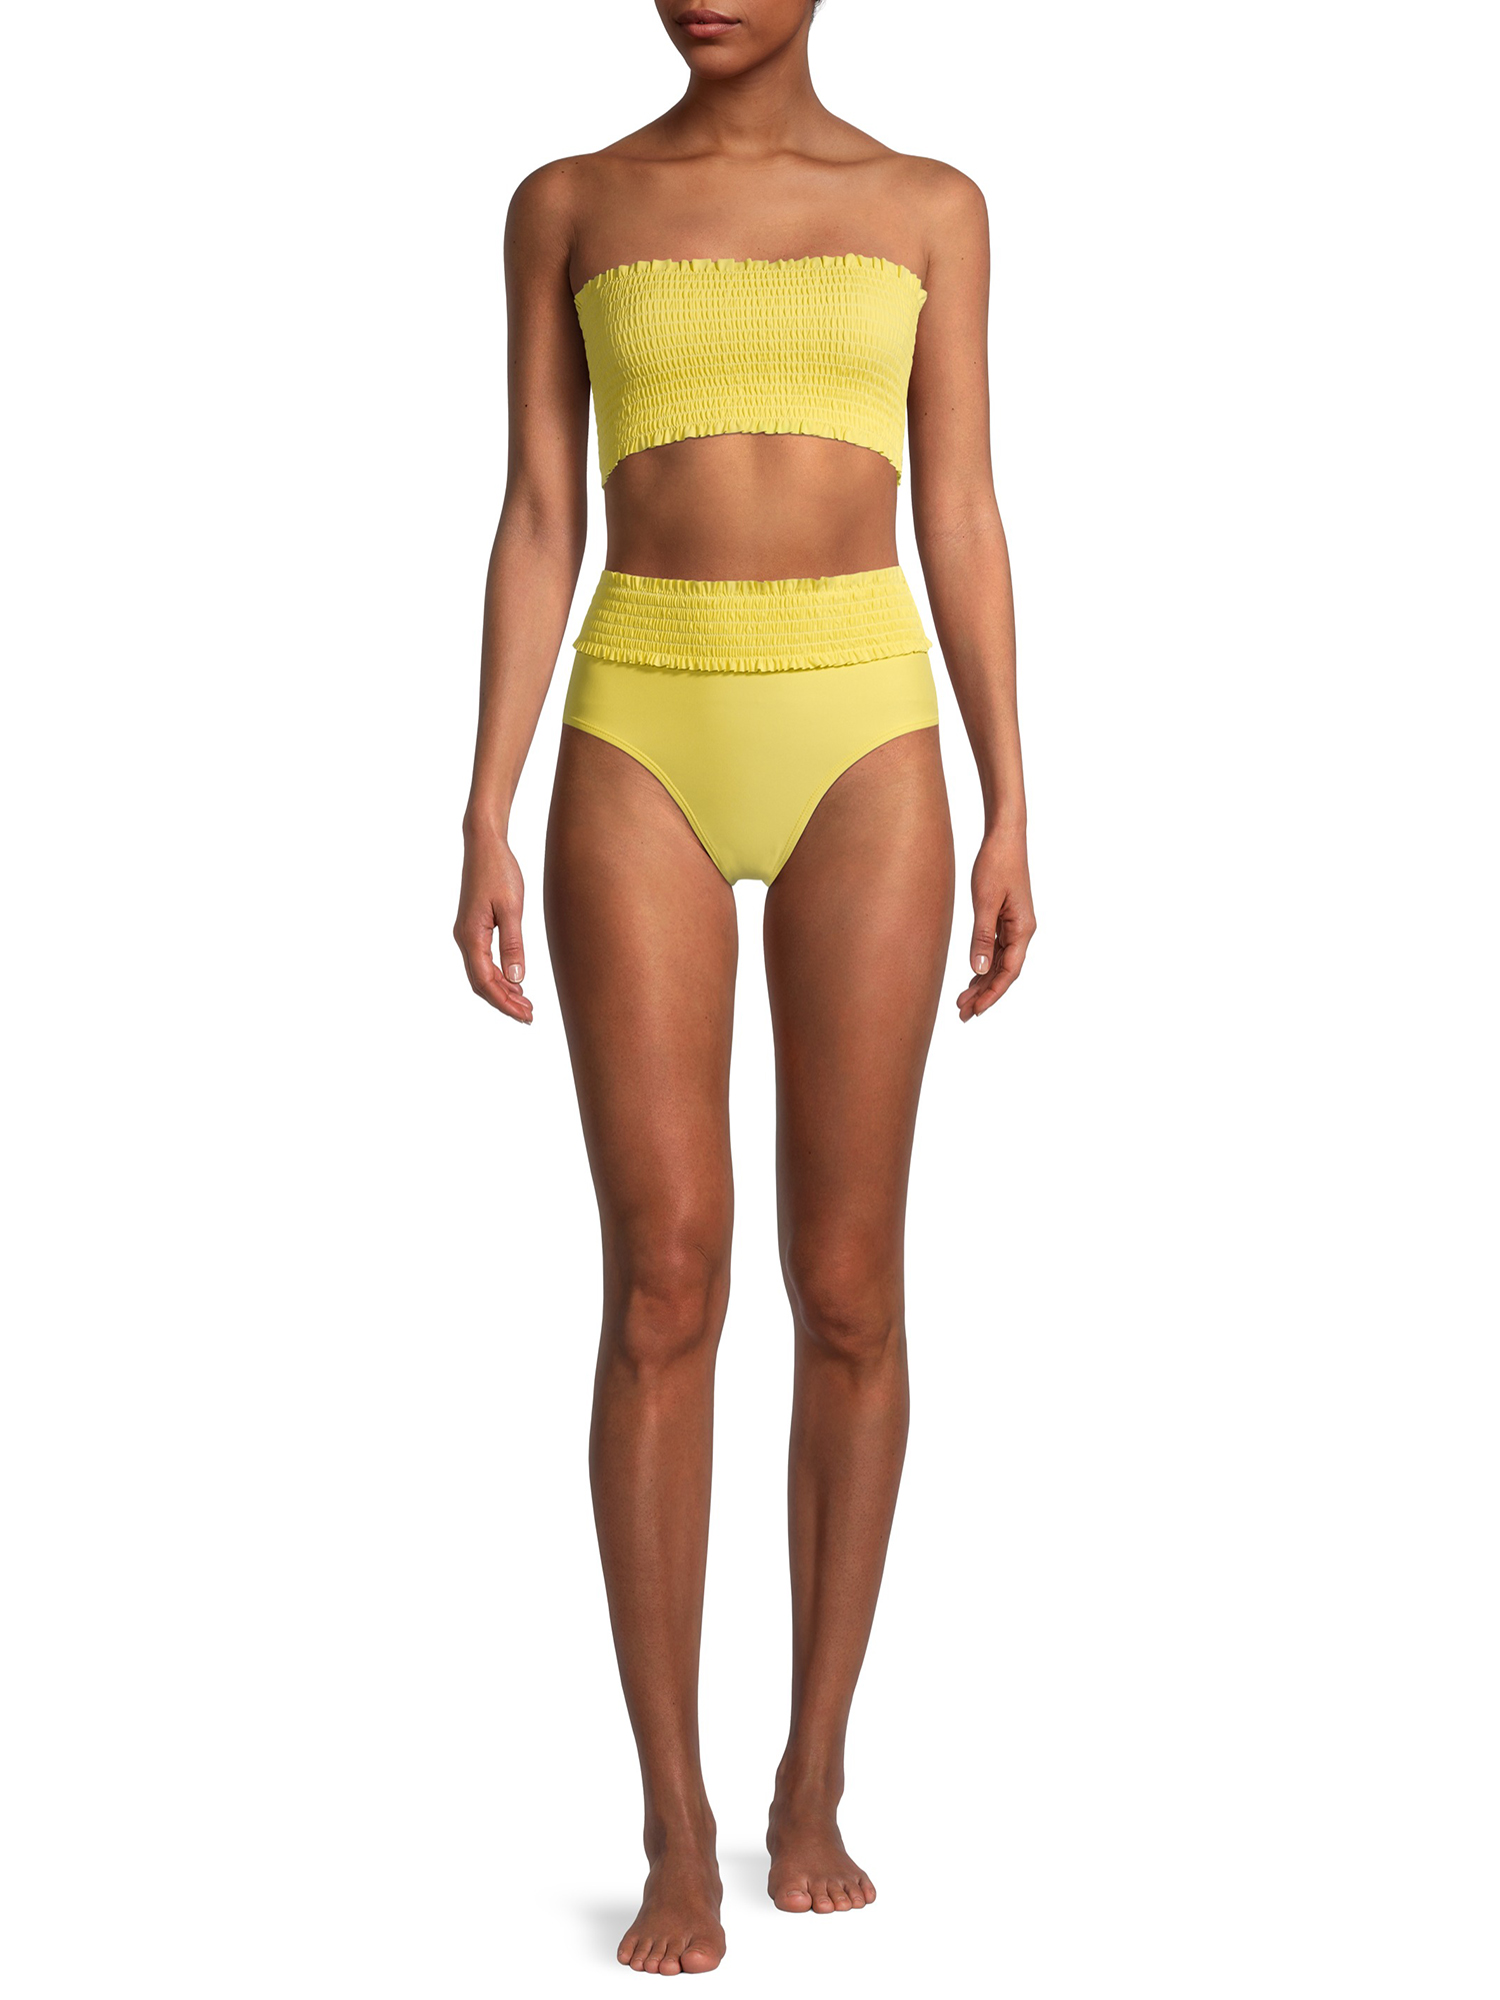 XOXO Women's Shirred Strapless Bandeau Bikini Swimsuit Top - image 2 of 6